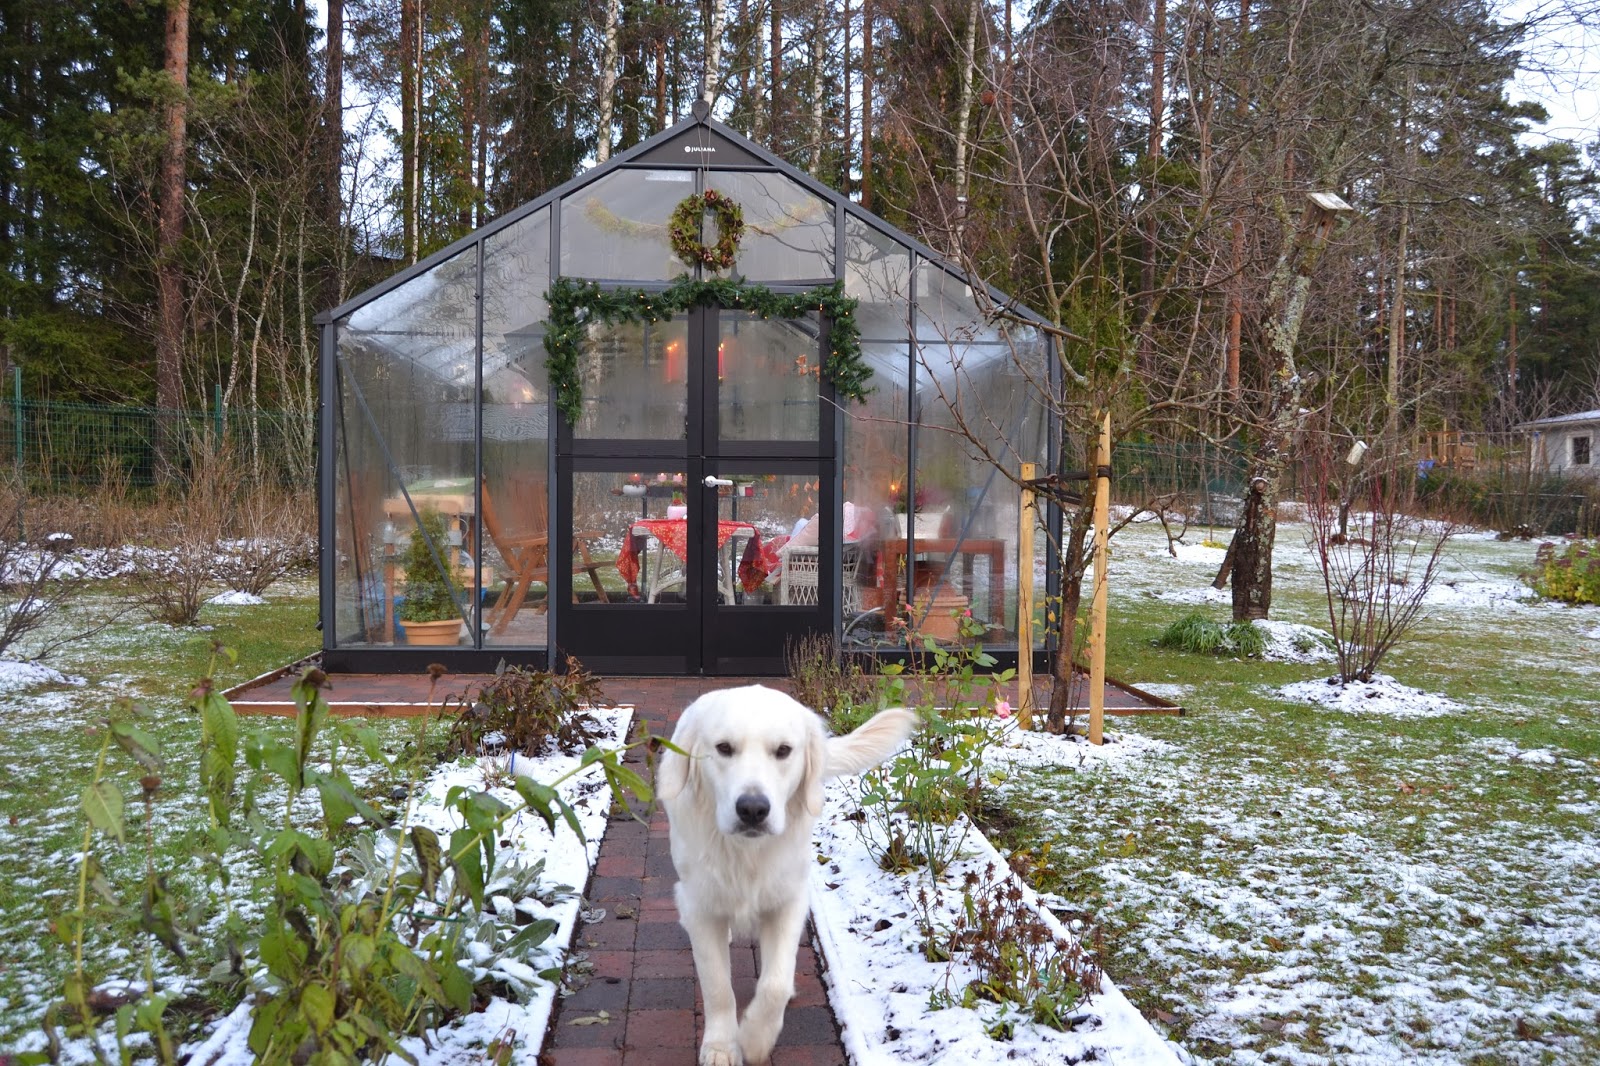 Pikkujouluttelua kasvarissa – Winternal feelings in the greenhouse